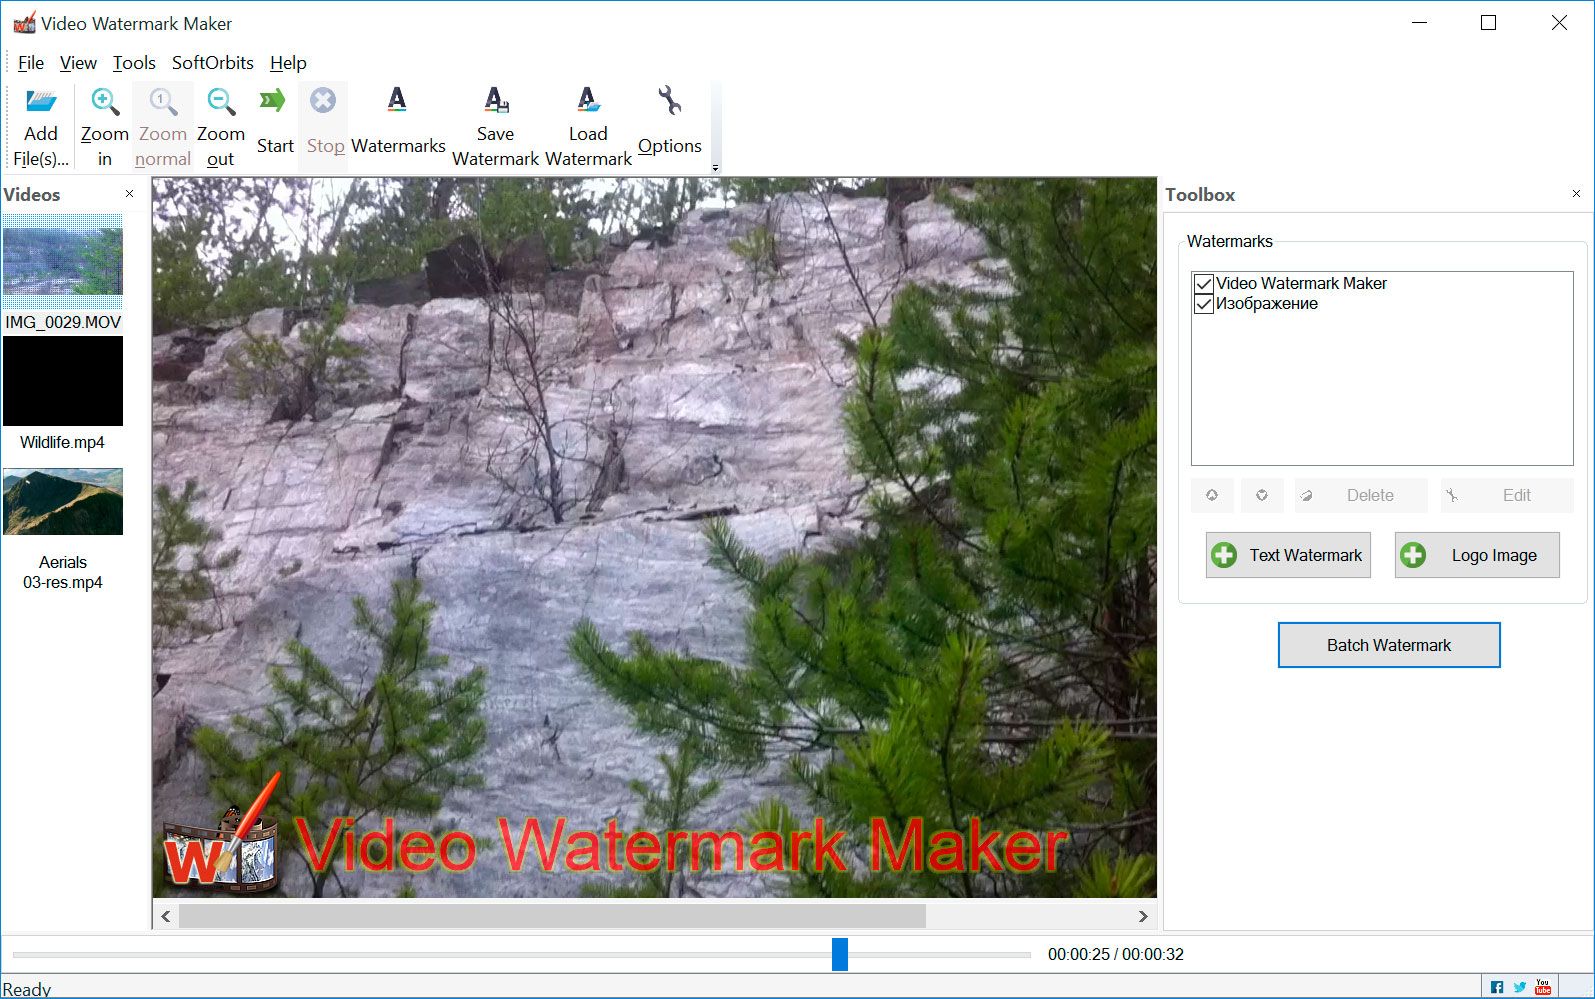 Video Watermark Maker Képernyőkép.